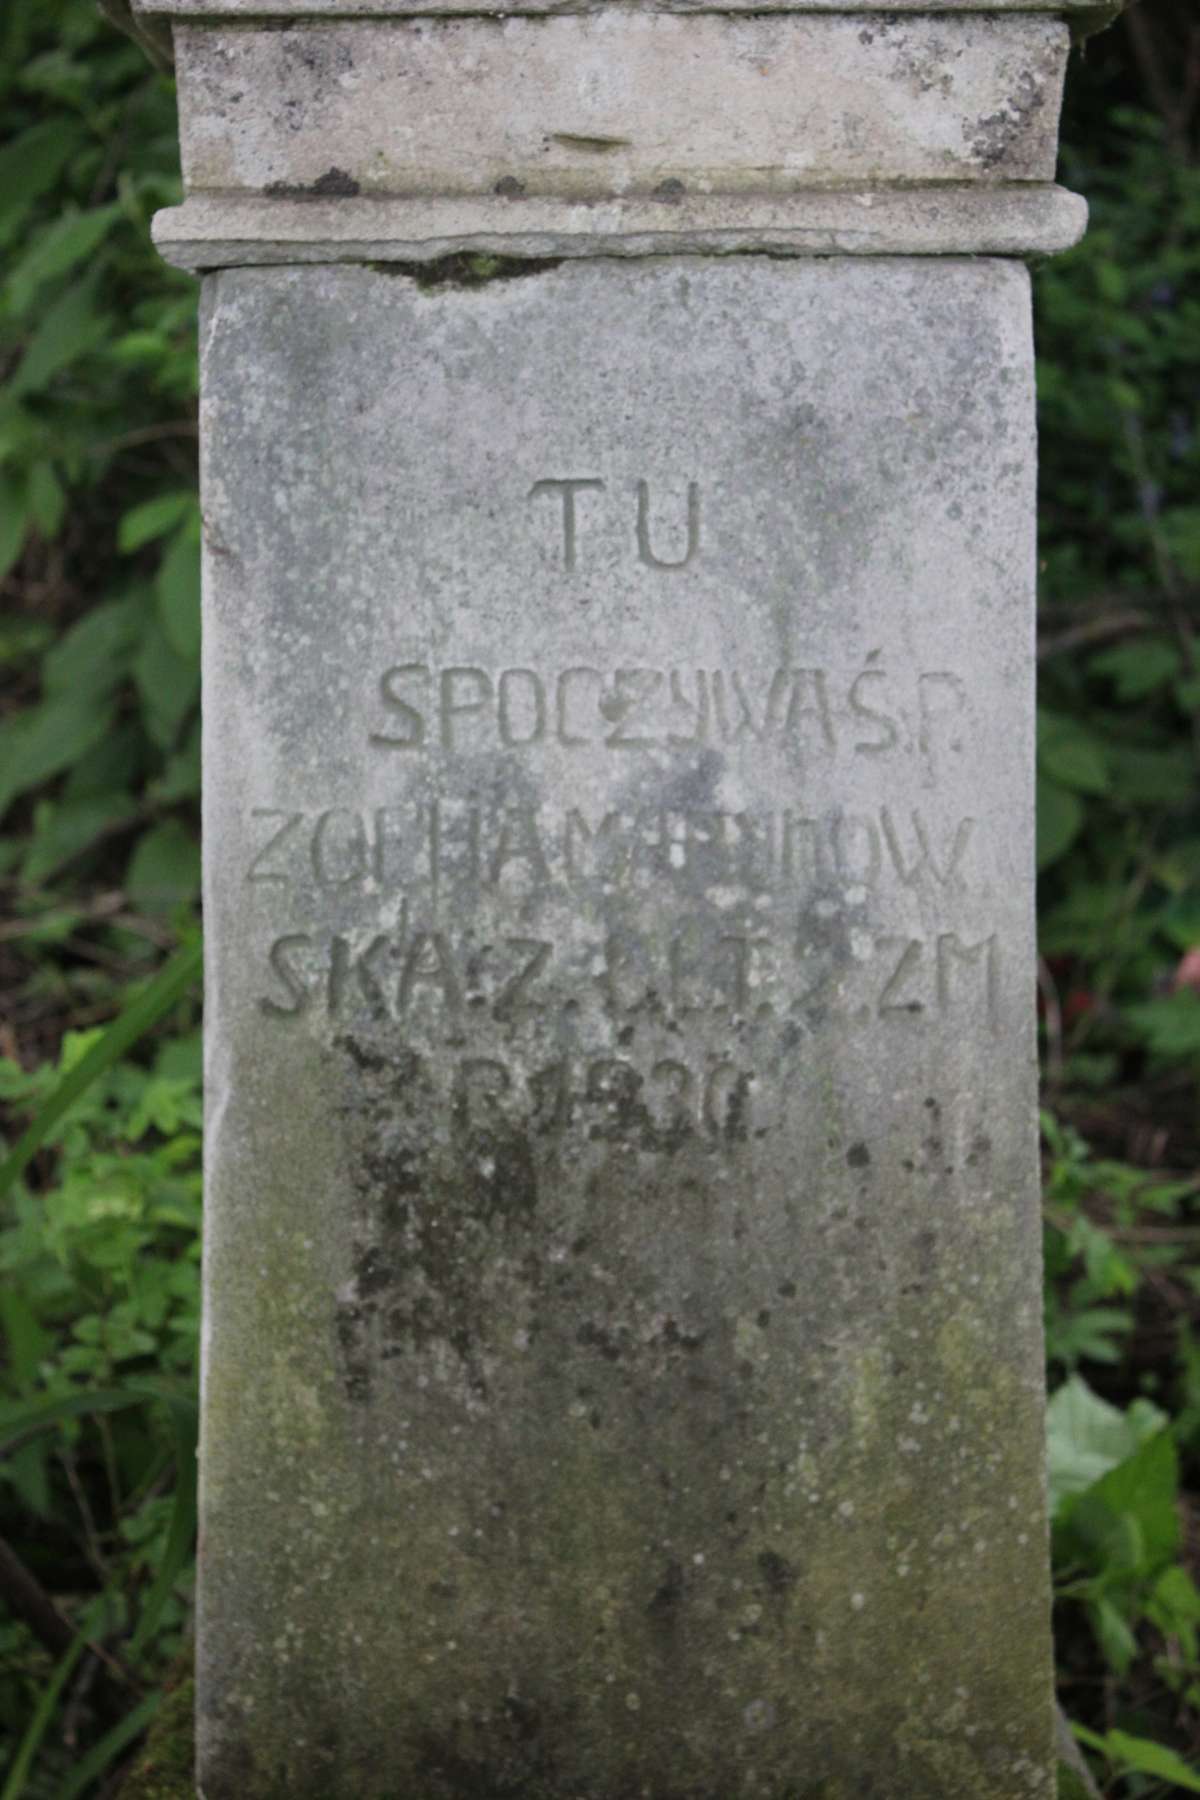 Inscription from the gravestone of Zofia Marynowska, Dobrowody cemetery, 2019